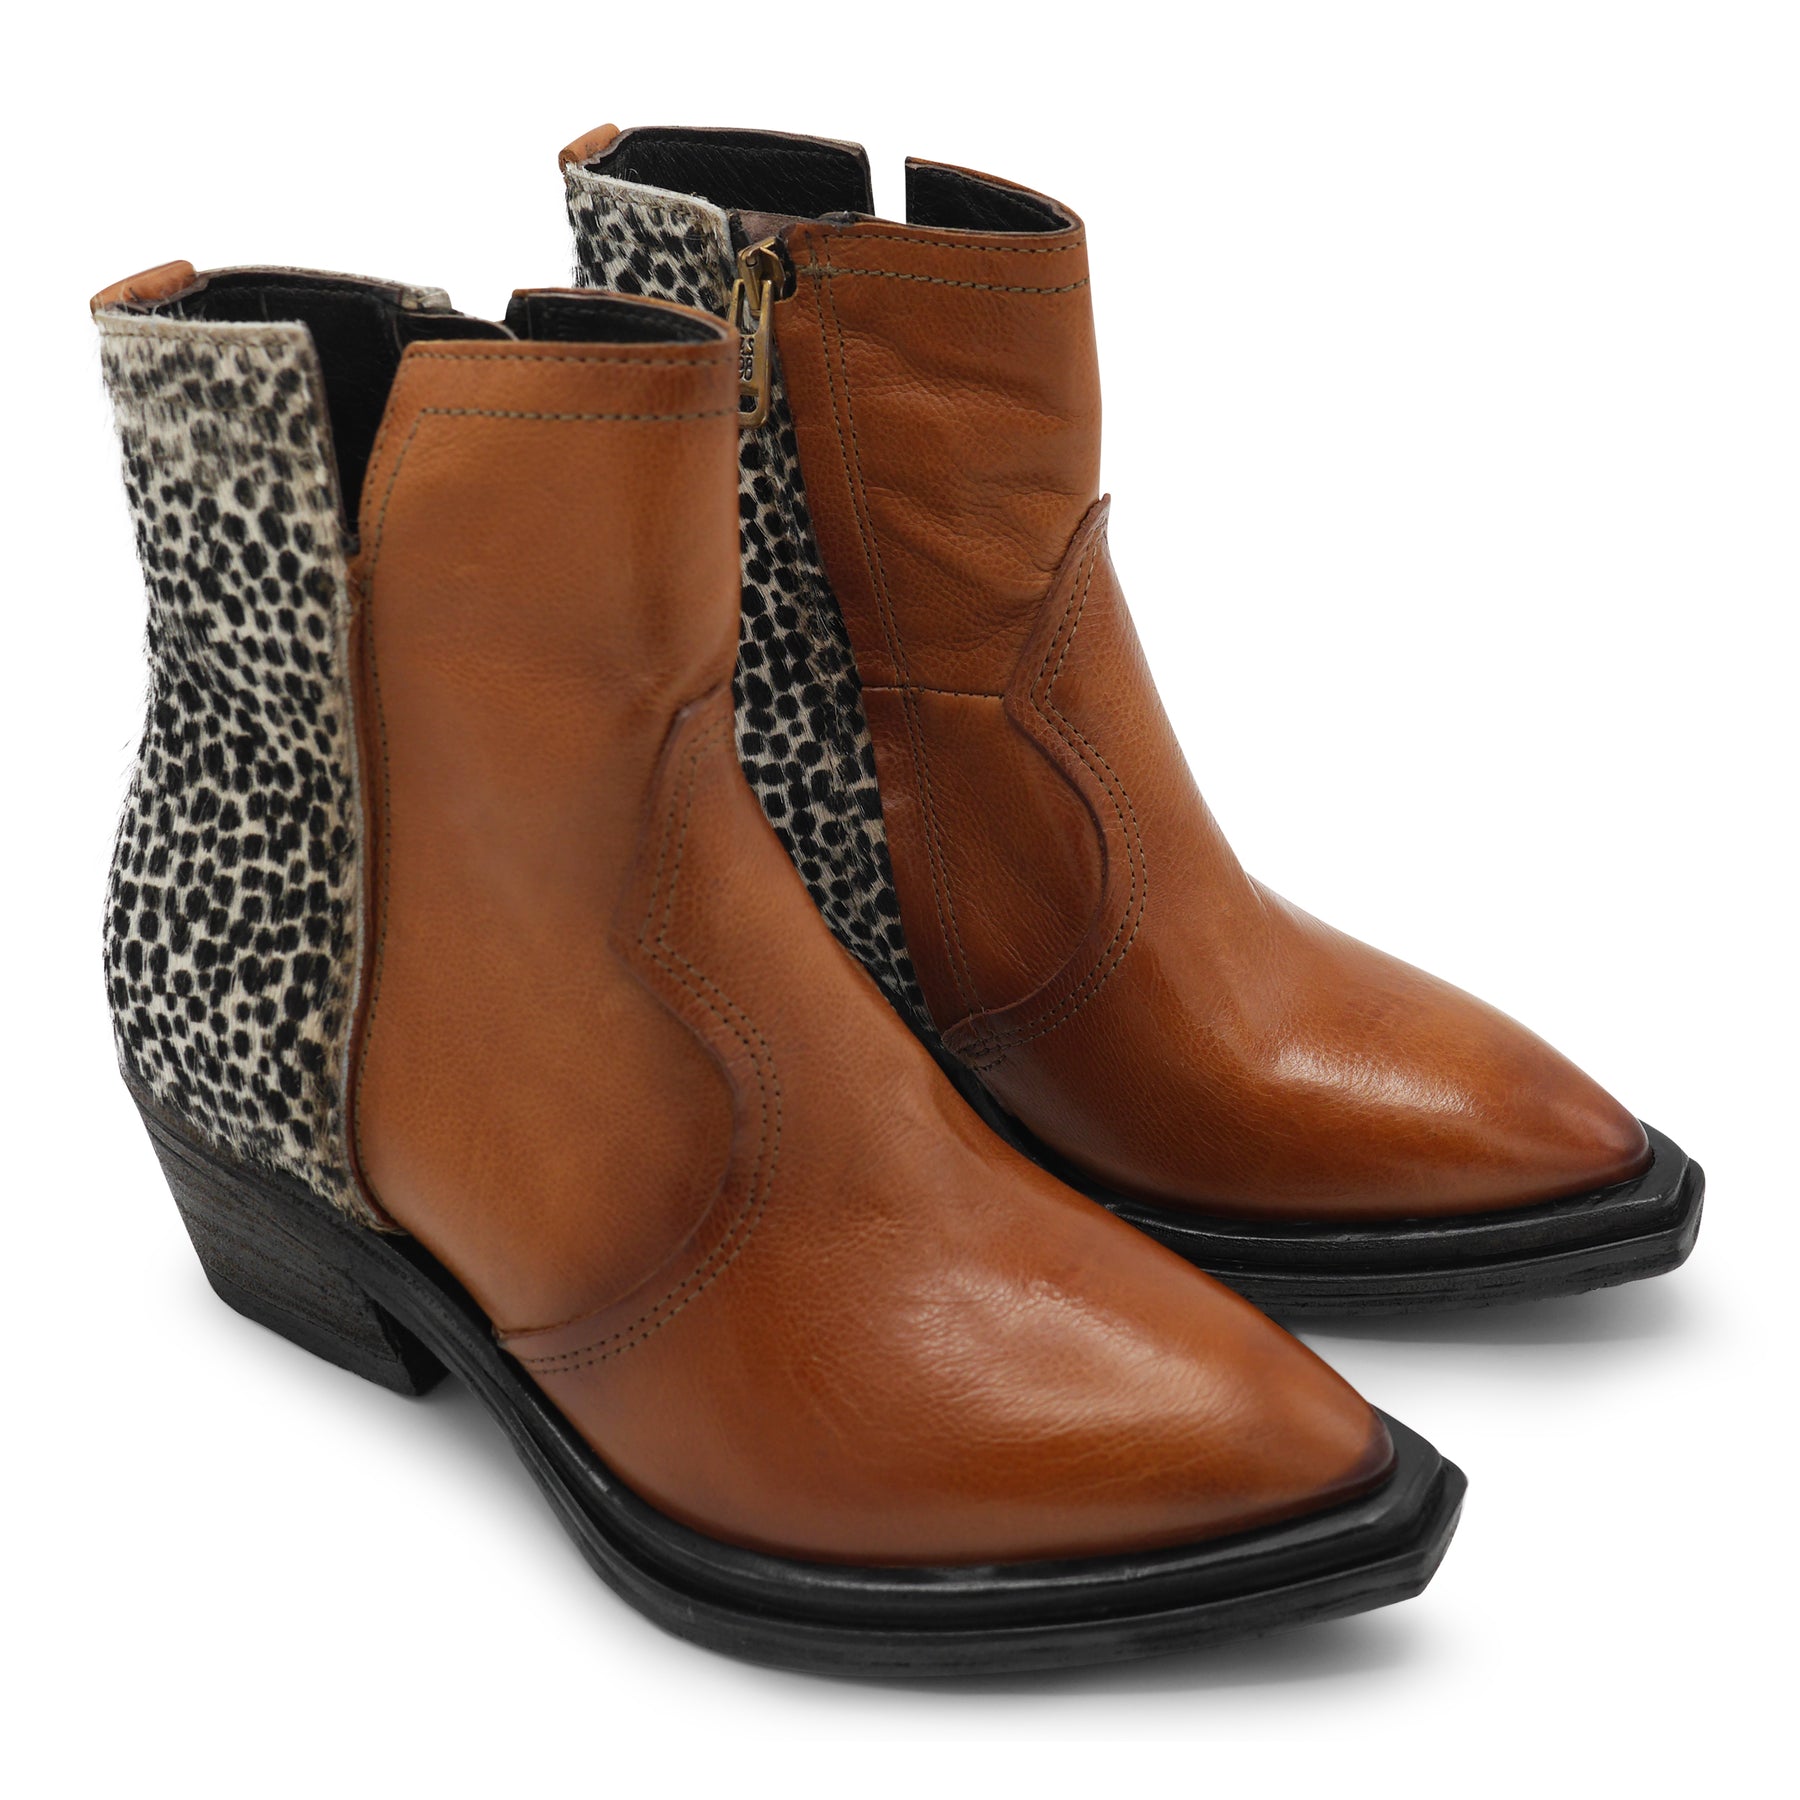 A55211 -Brandy Cheetah Zipped Ankle Boot